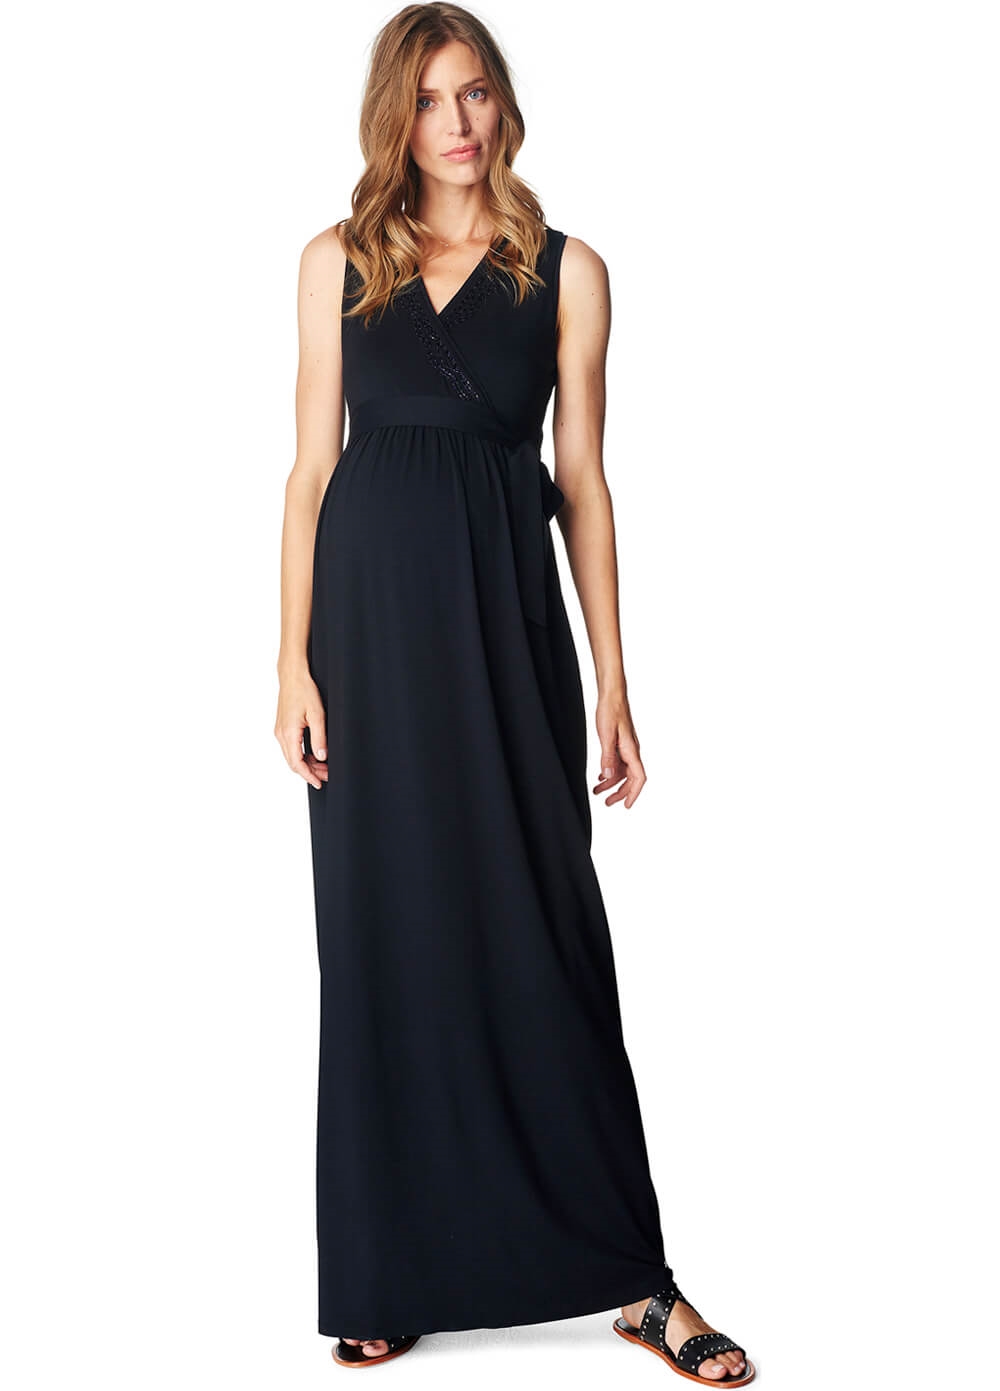 Beaded Neckline Maternity Maxi Dress in Black by Esprit